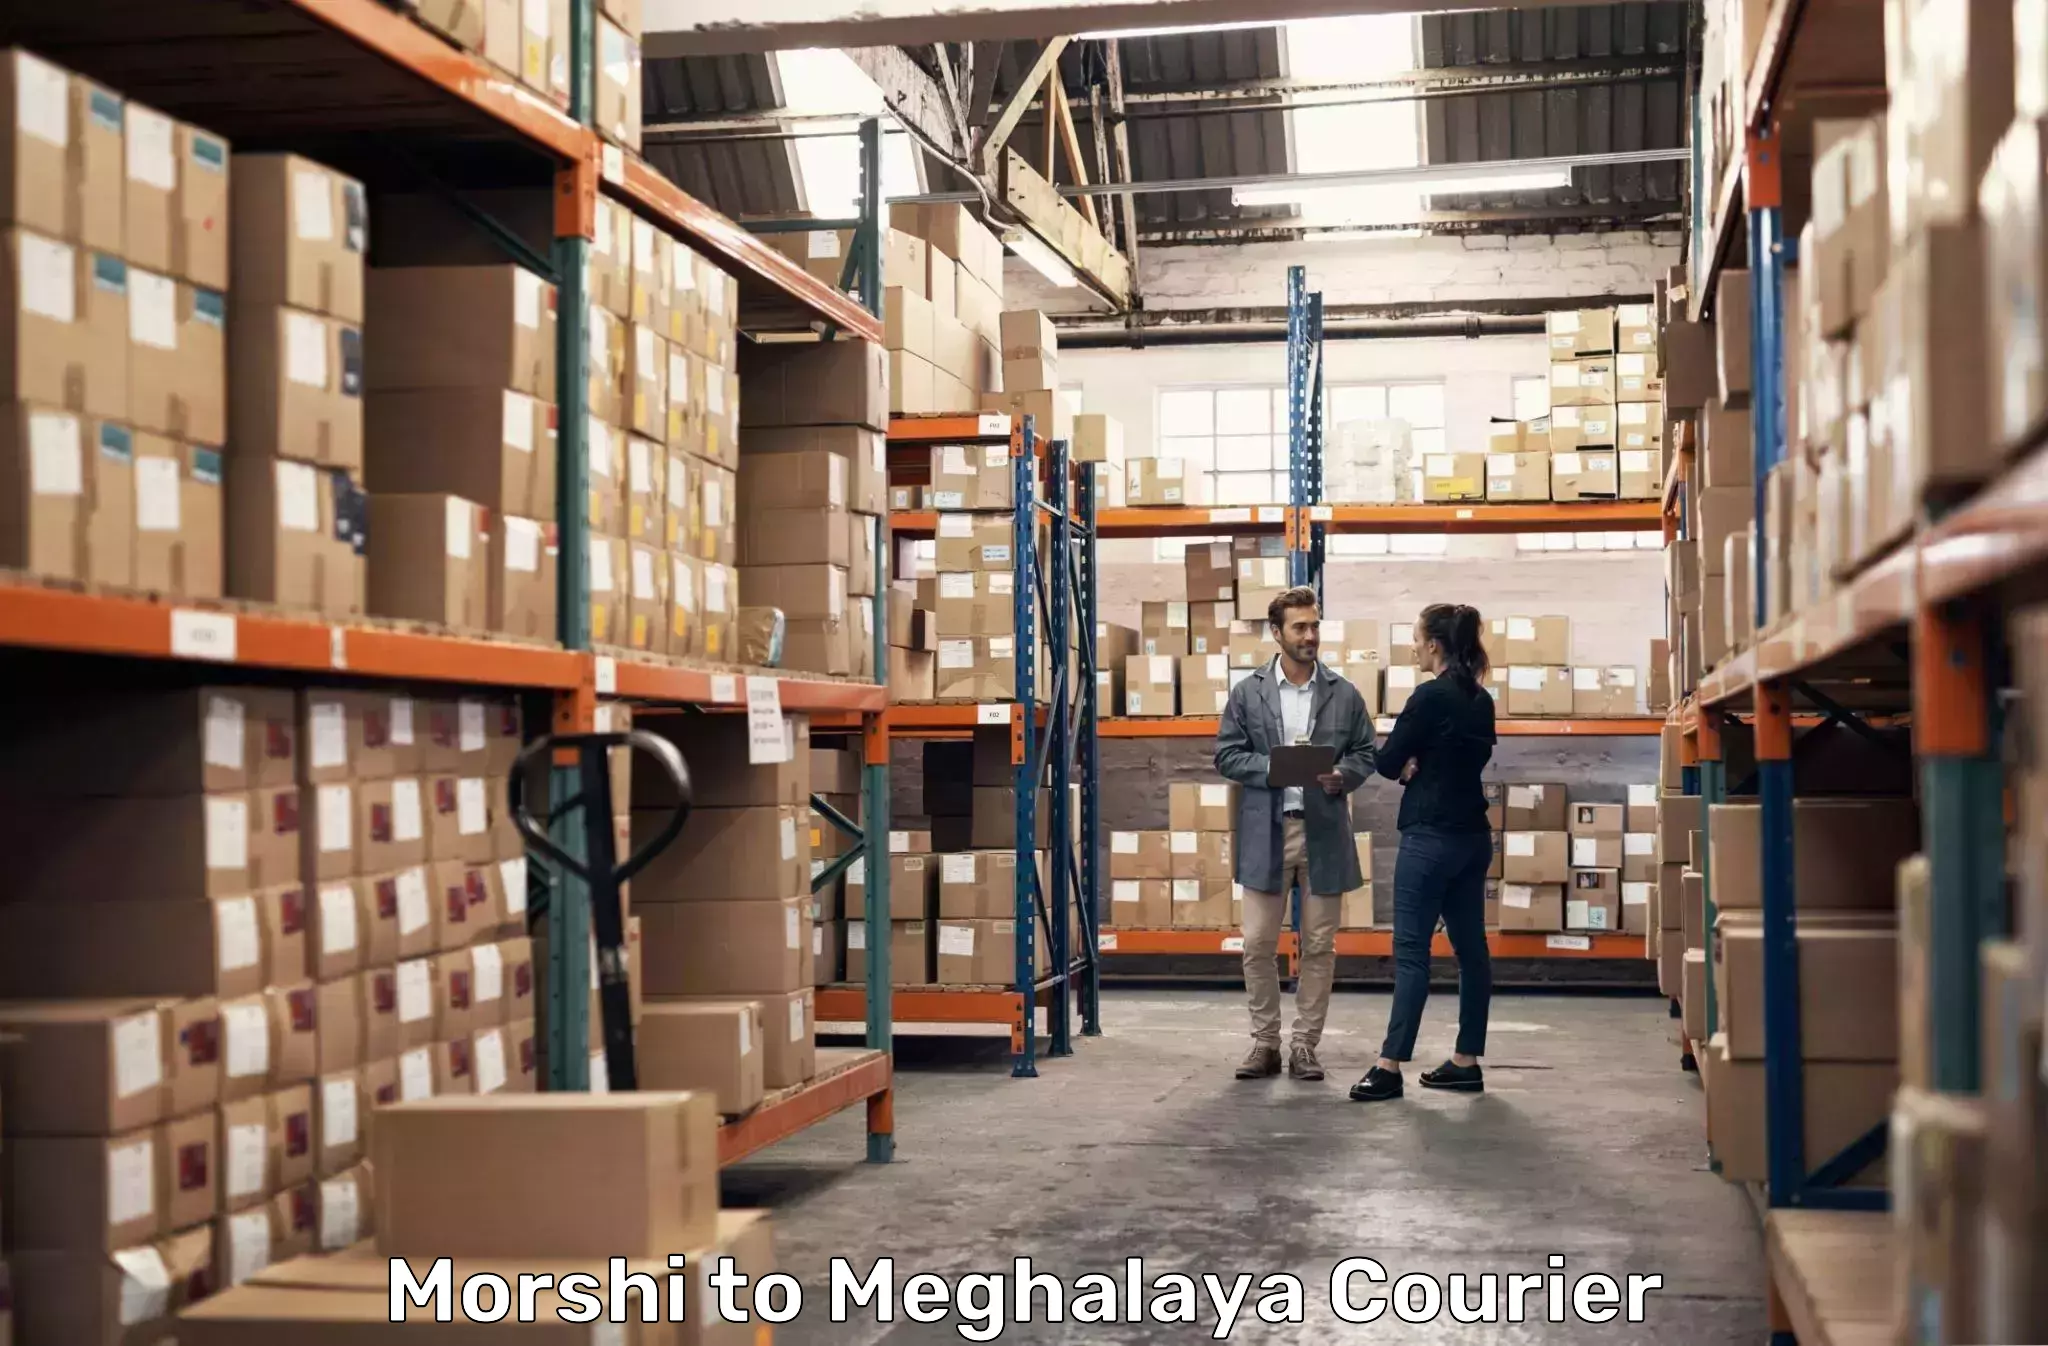 Courier service innovation Morshi to Meghalaya